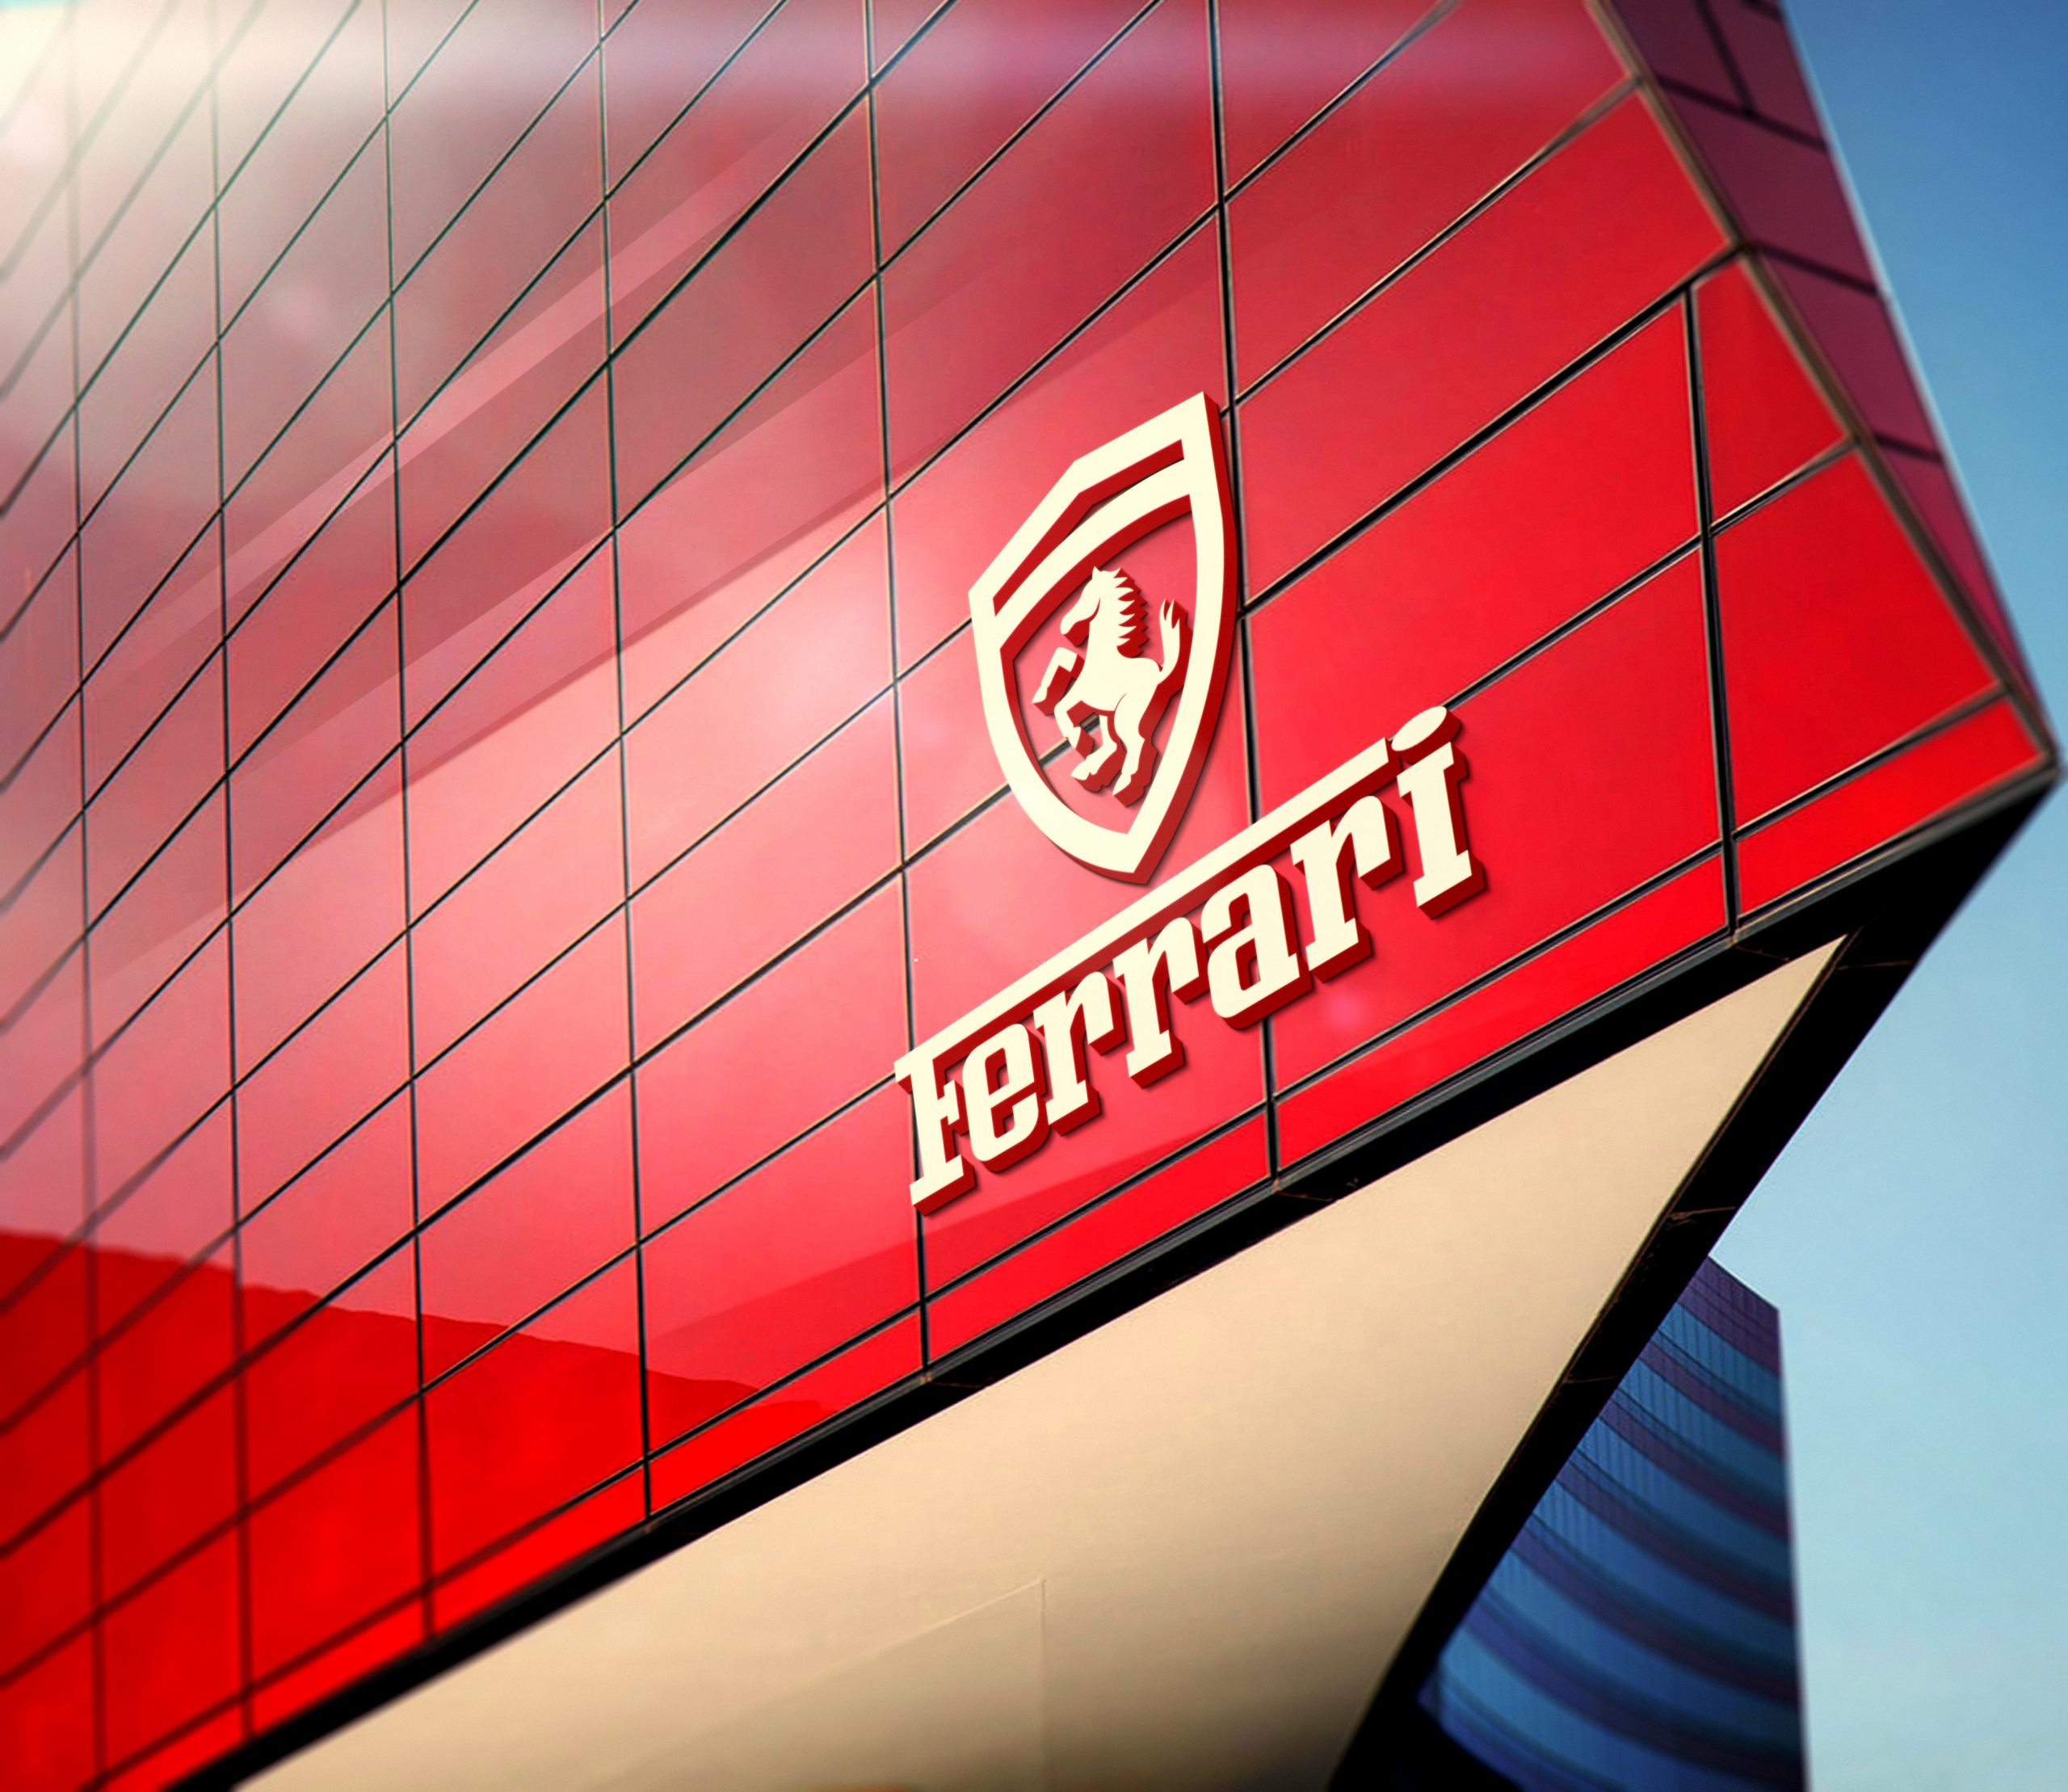 Ferrari Free 3D Red Building Facade Logo Mockup